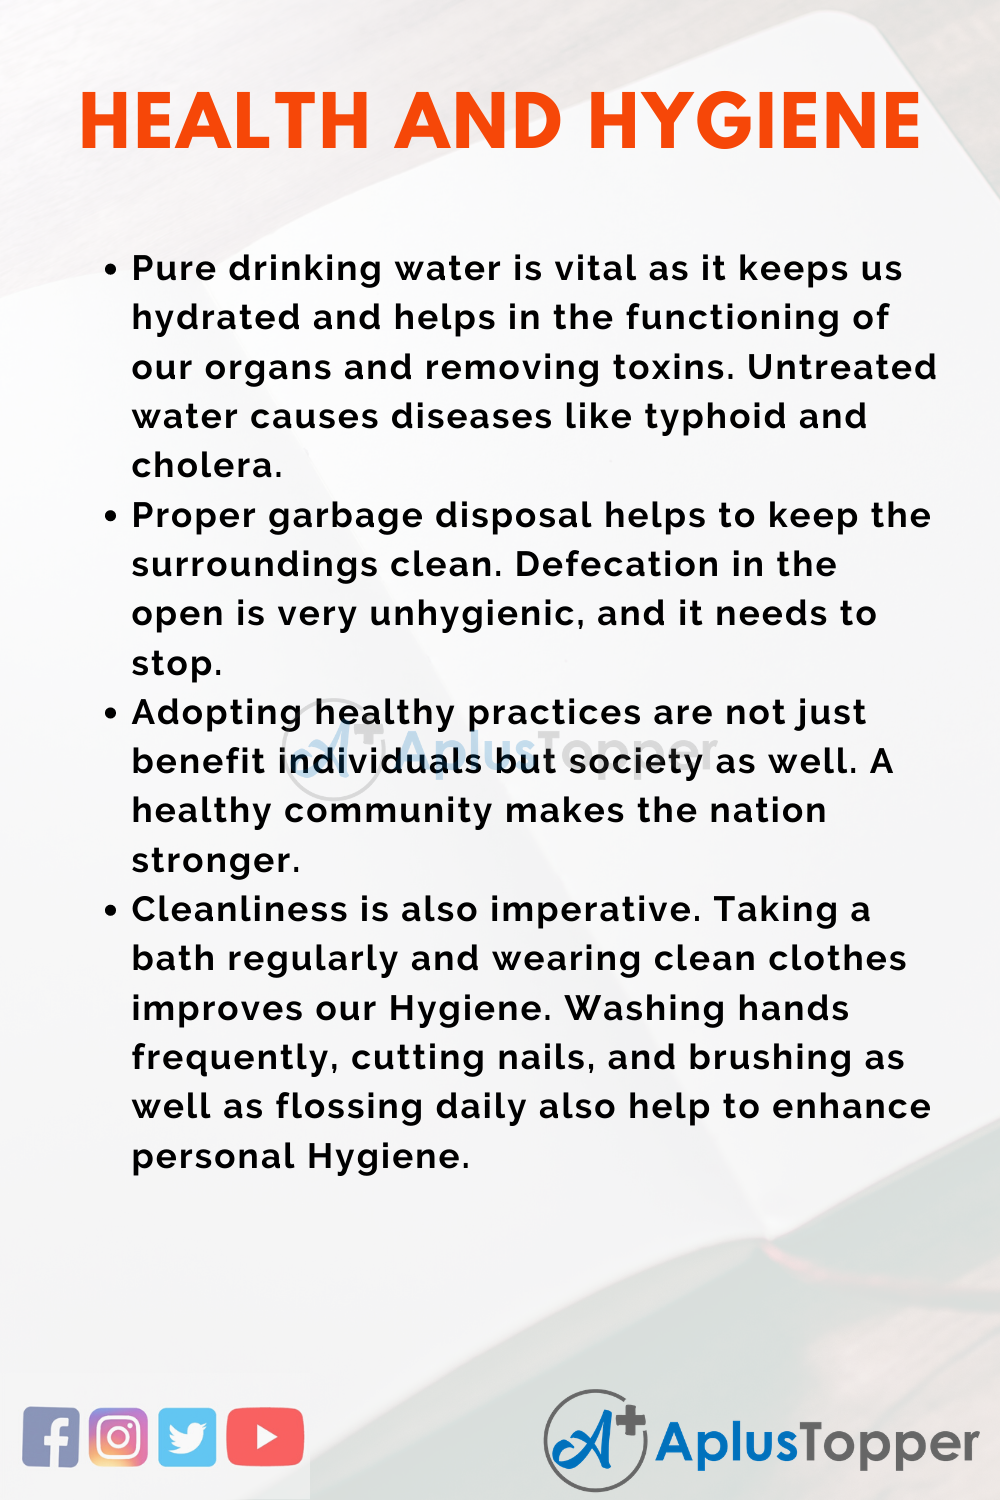 Essay on Health and Hygiene